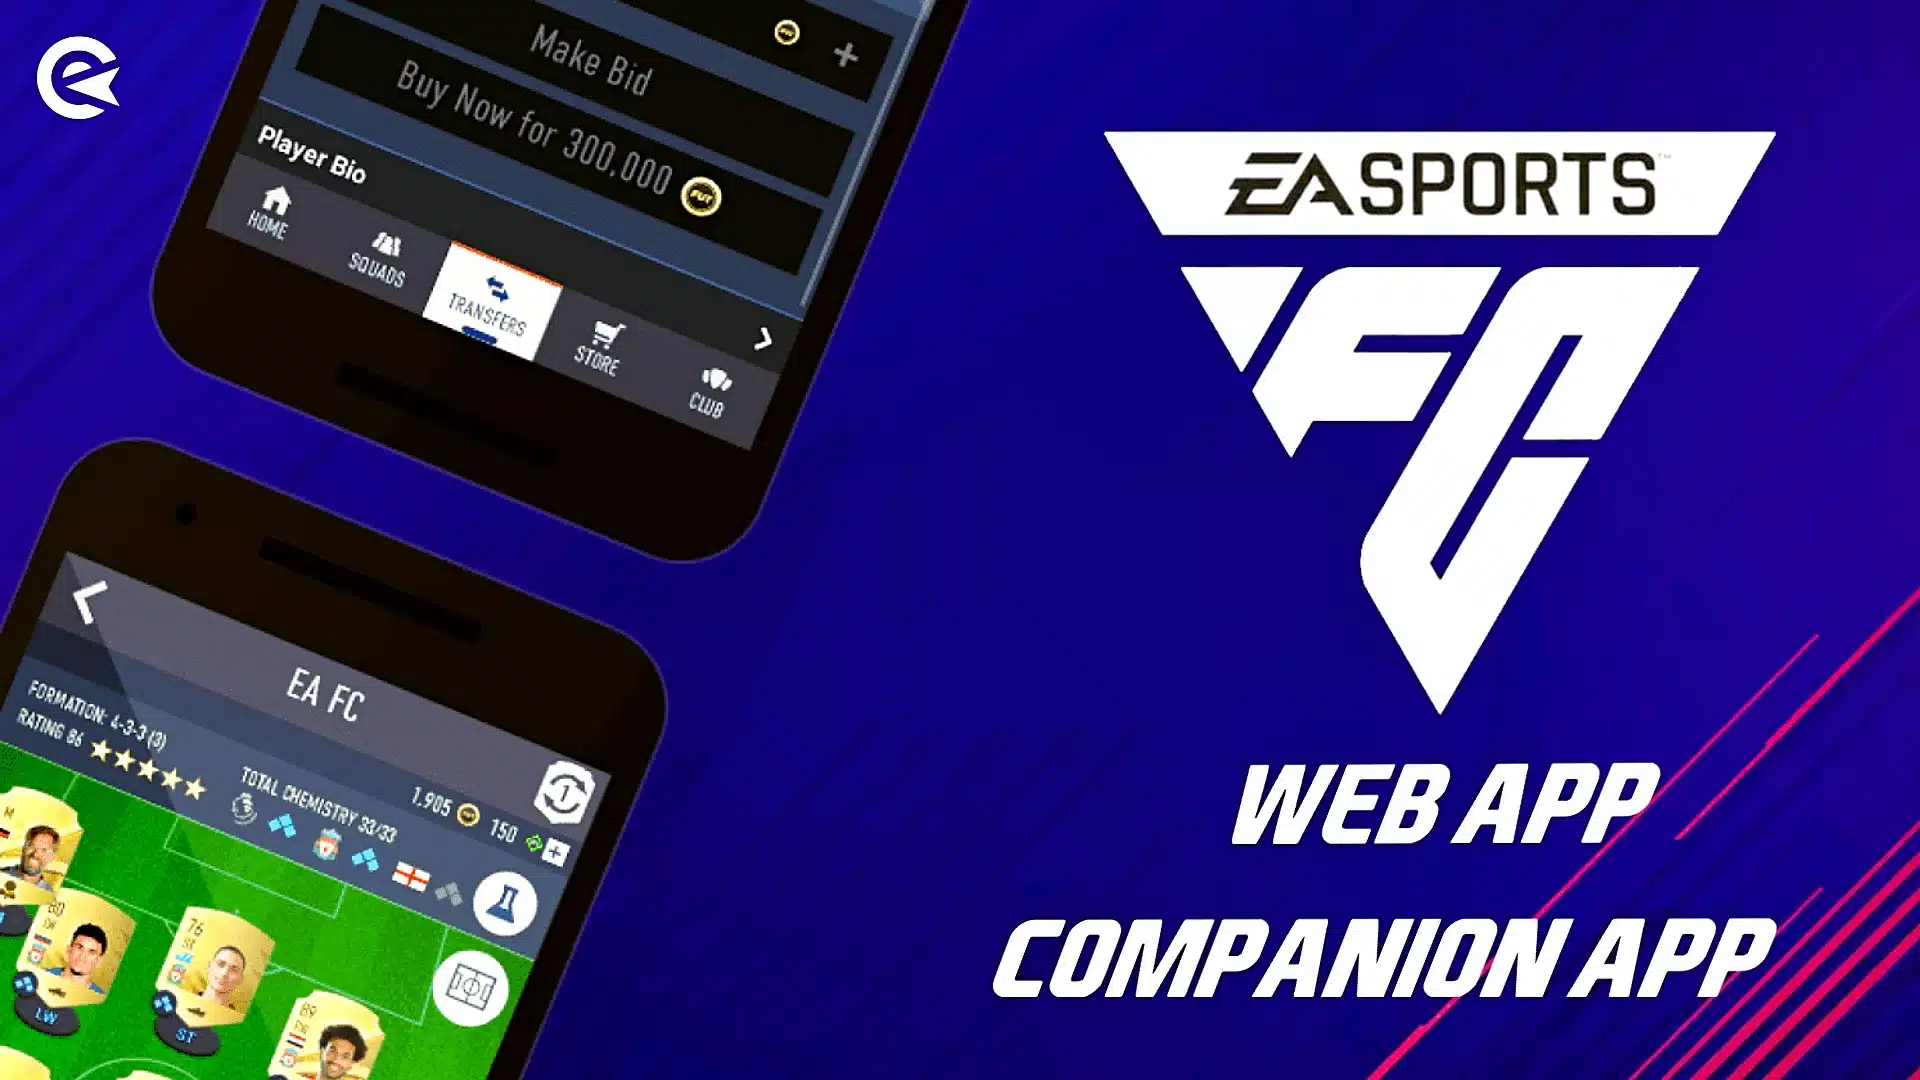 EA FC 24 Web App Pro Tips 🔥 Releases Today #eafc #fifa #fut